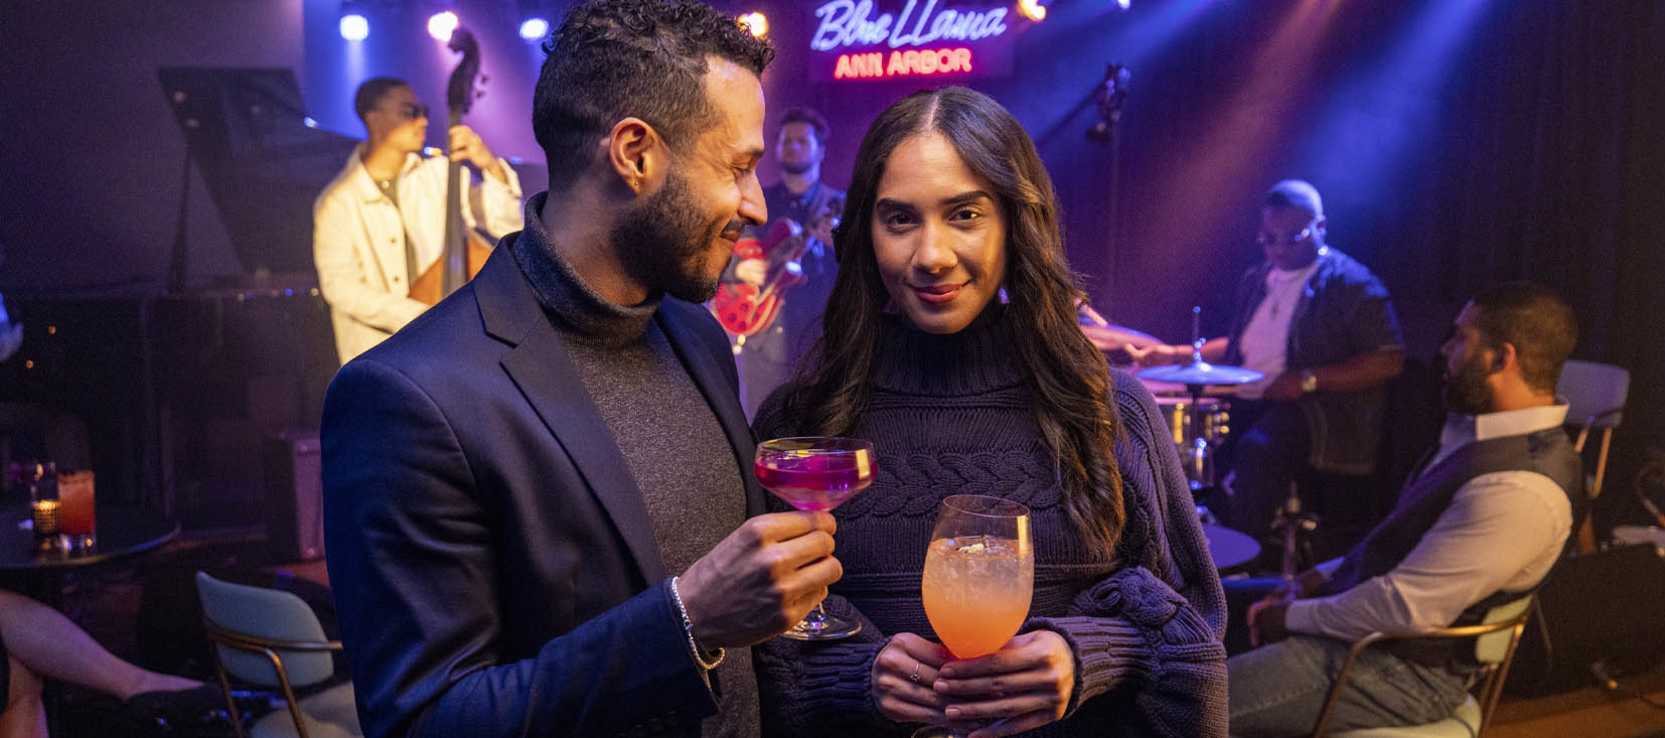 Couple holding drinks at Blue Llama Jazz Club